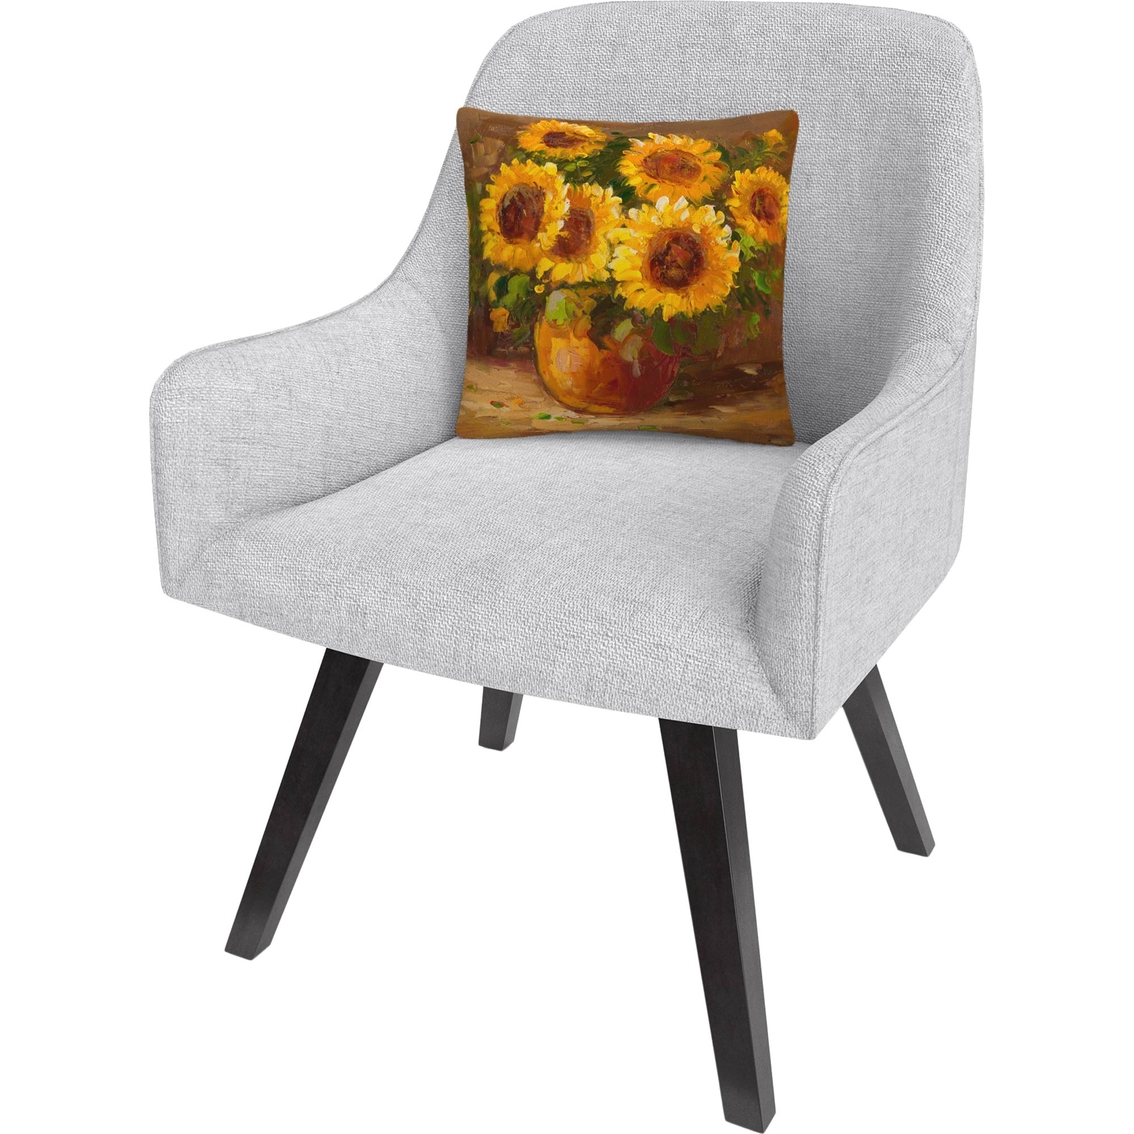 Trademark Fine Art Masters Fine Art Sunflowers Still Life Decorative Throw Pillow - Image 2 of 3